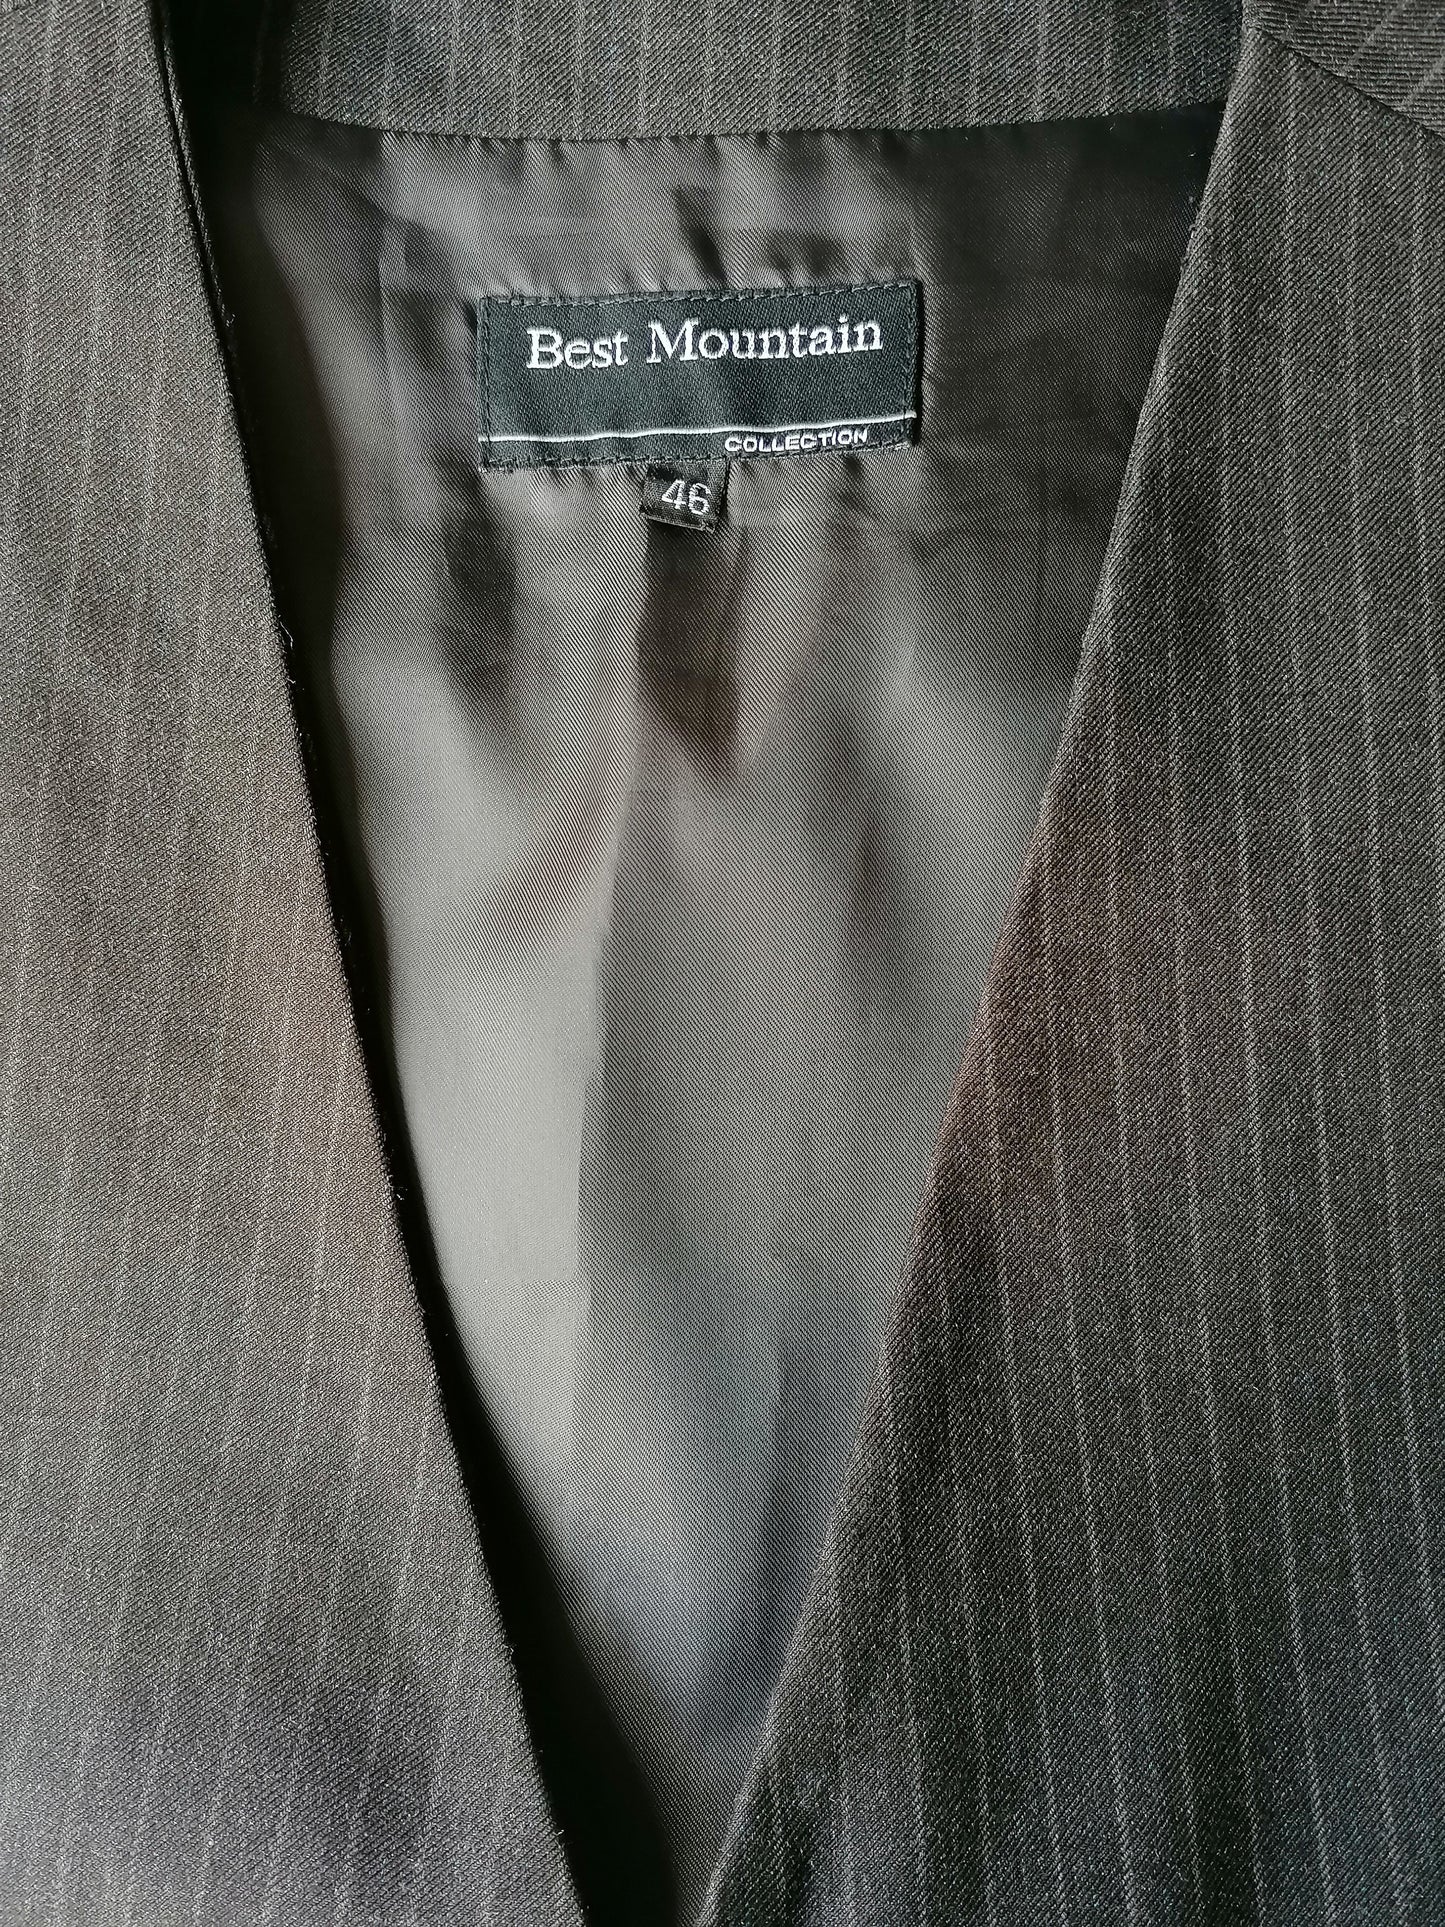 Best mountain waistcoat. Brown striped. Size 46 / S.